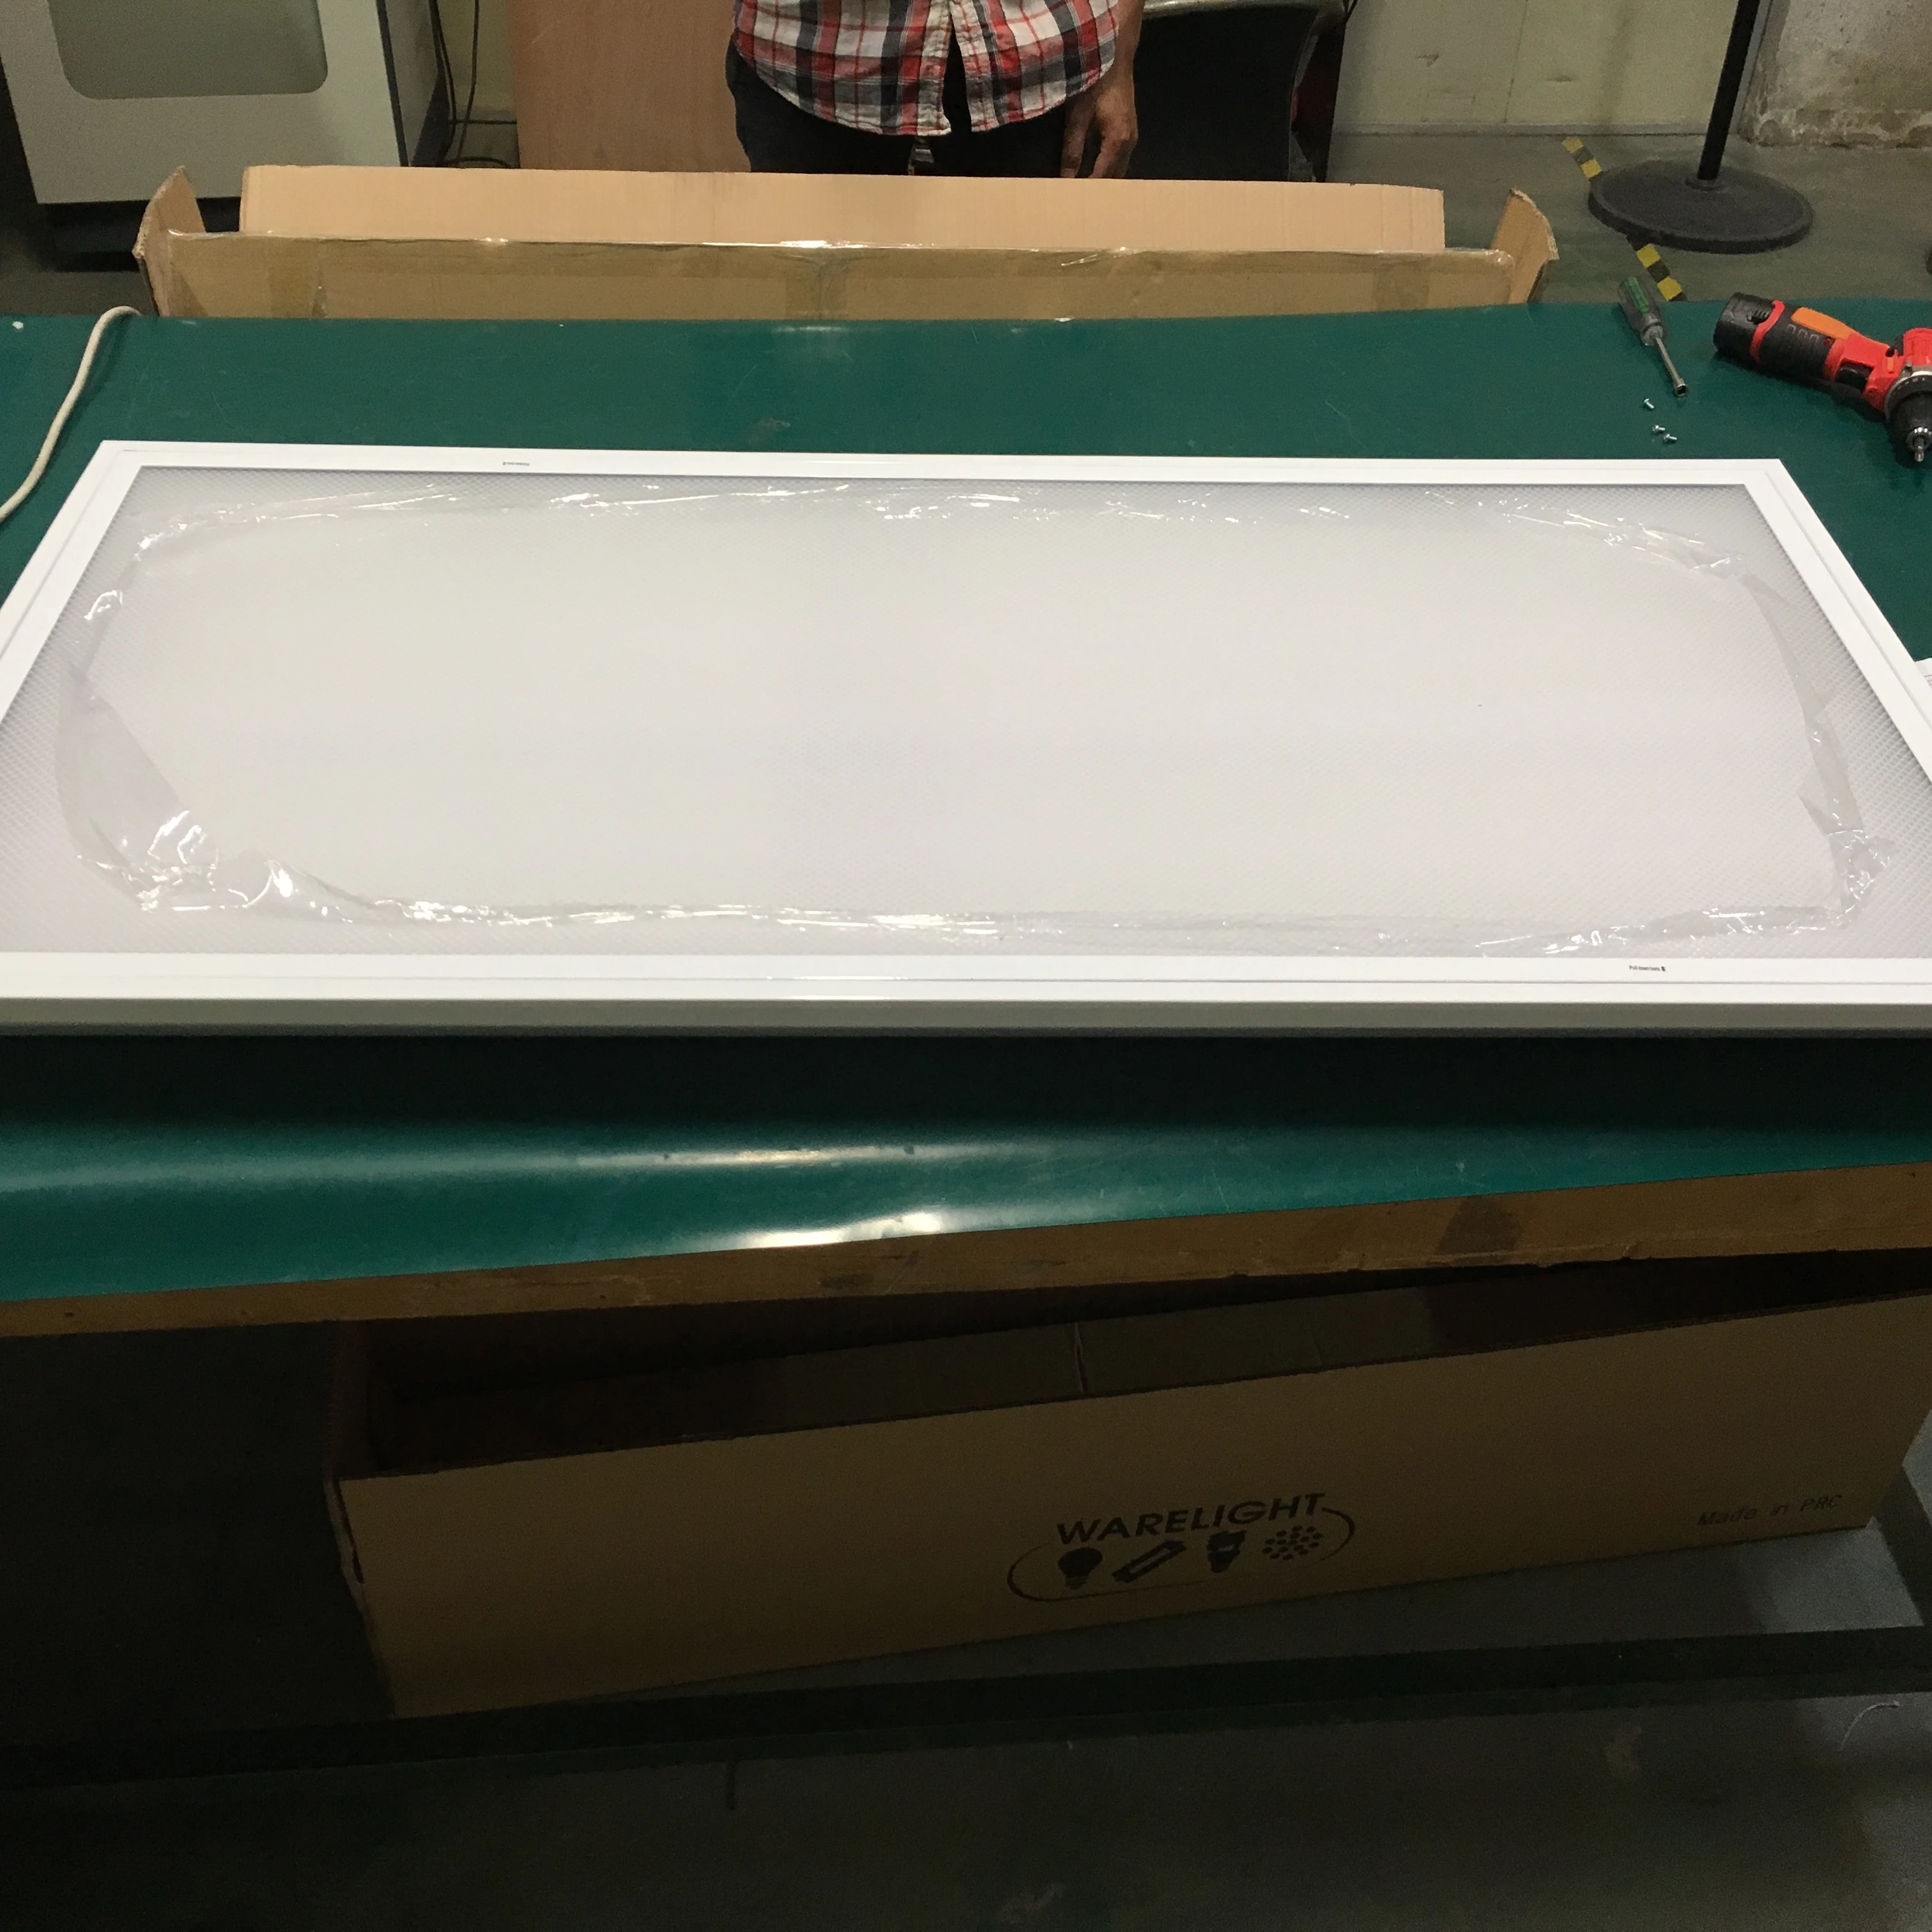 2x4 40w 60w led troffer retrofit kits light in USA warehouse